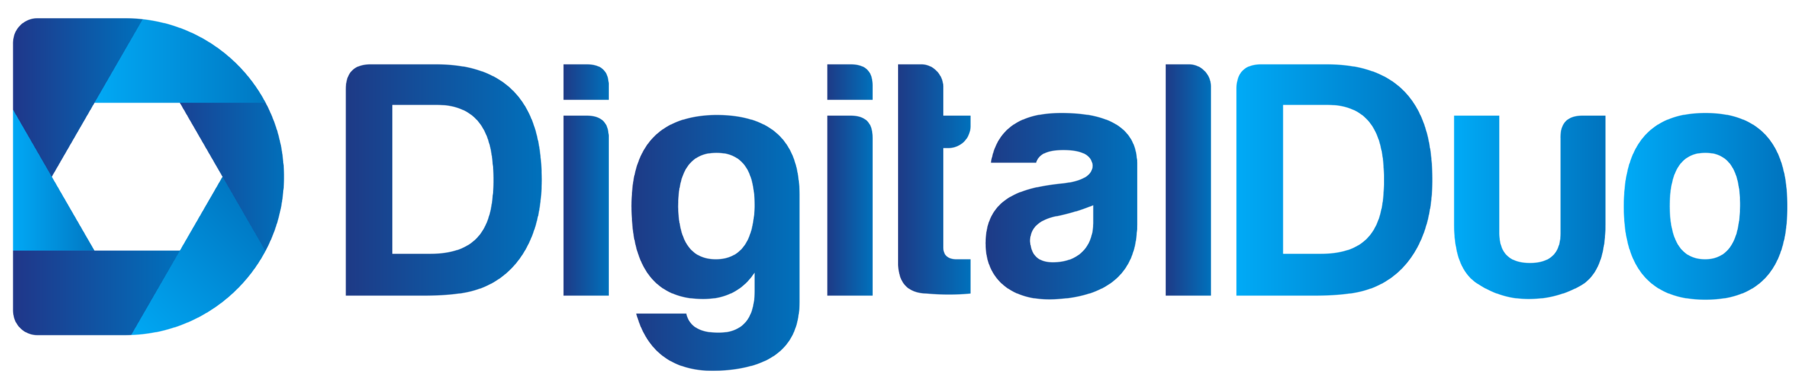 Chicago Digital Duo Logo